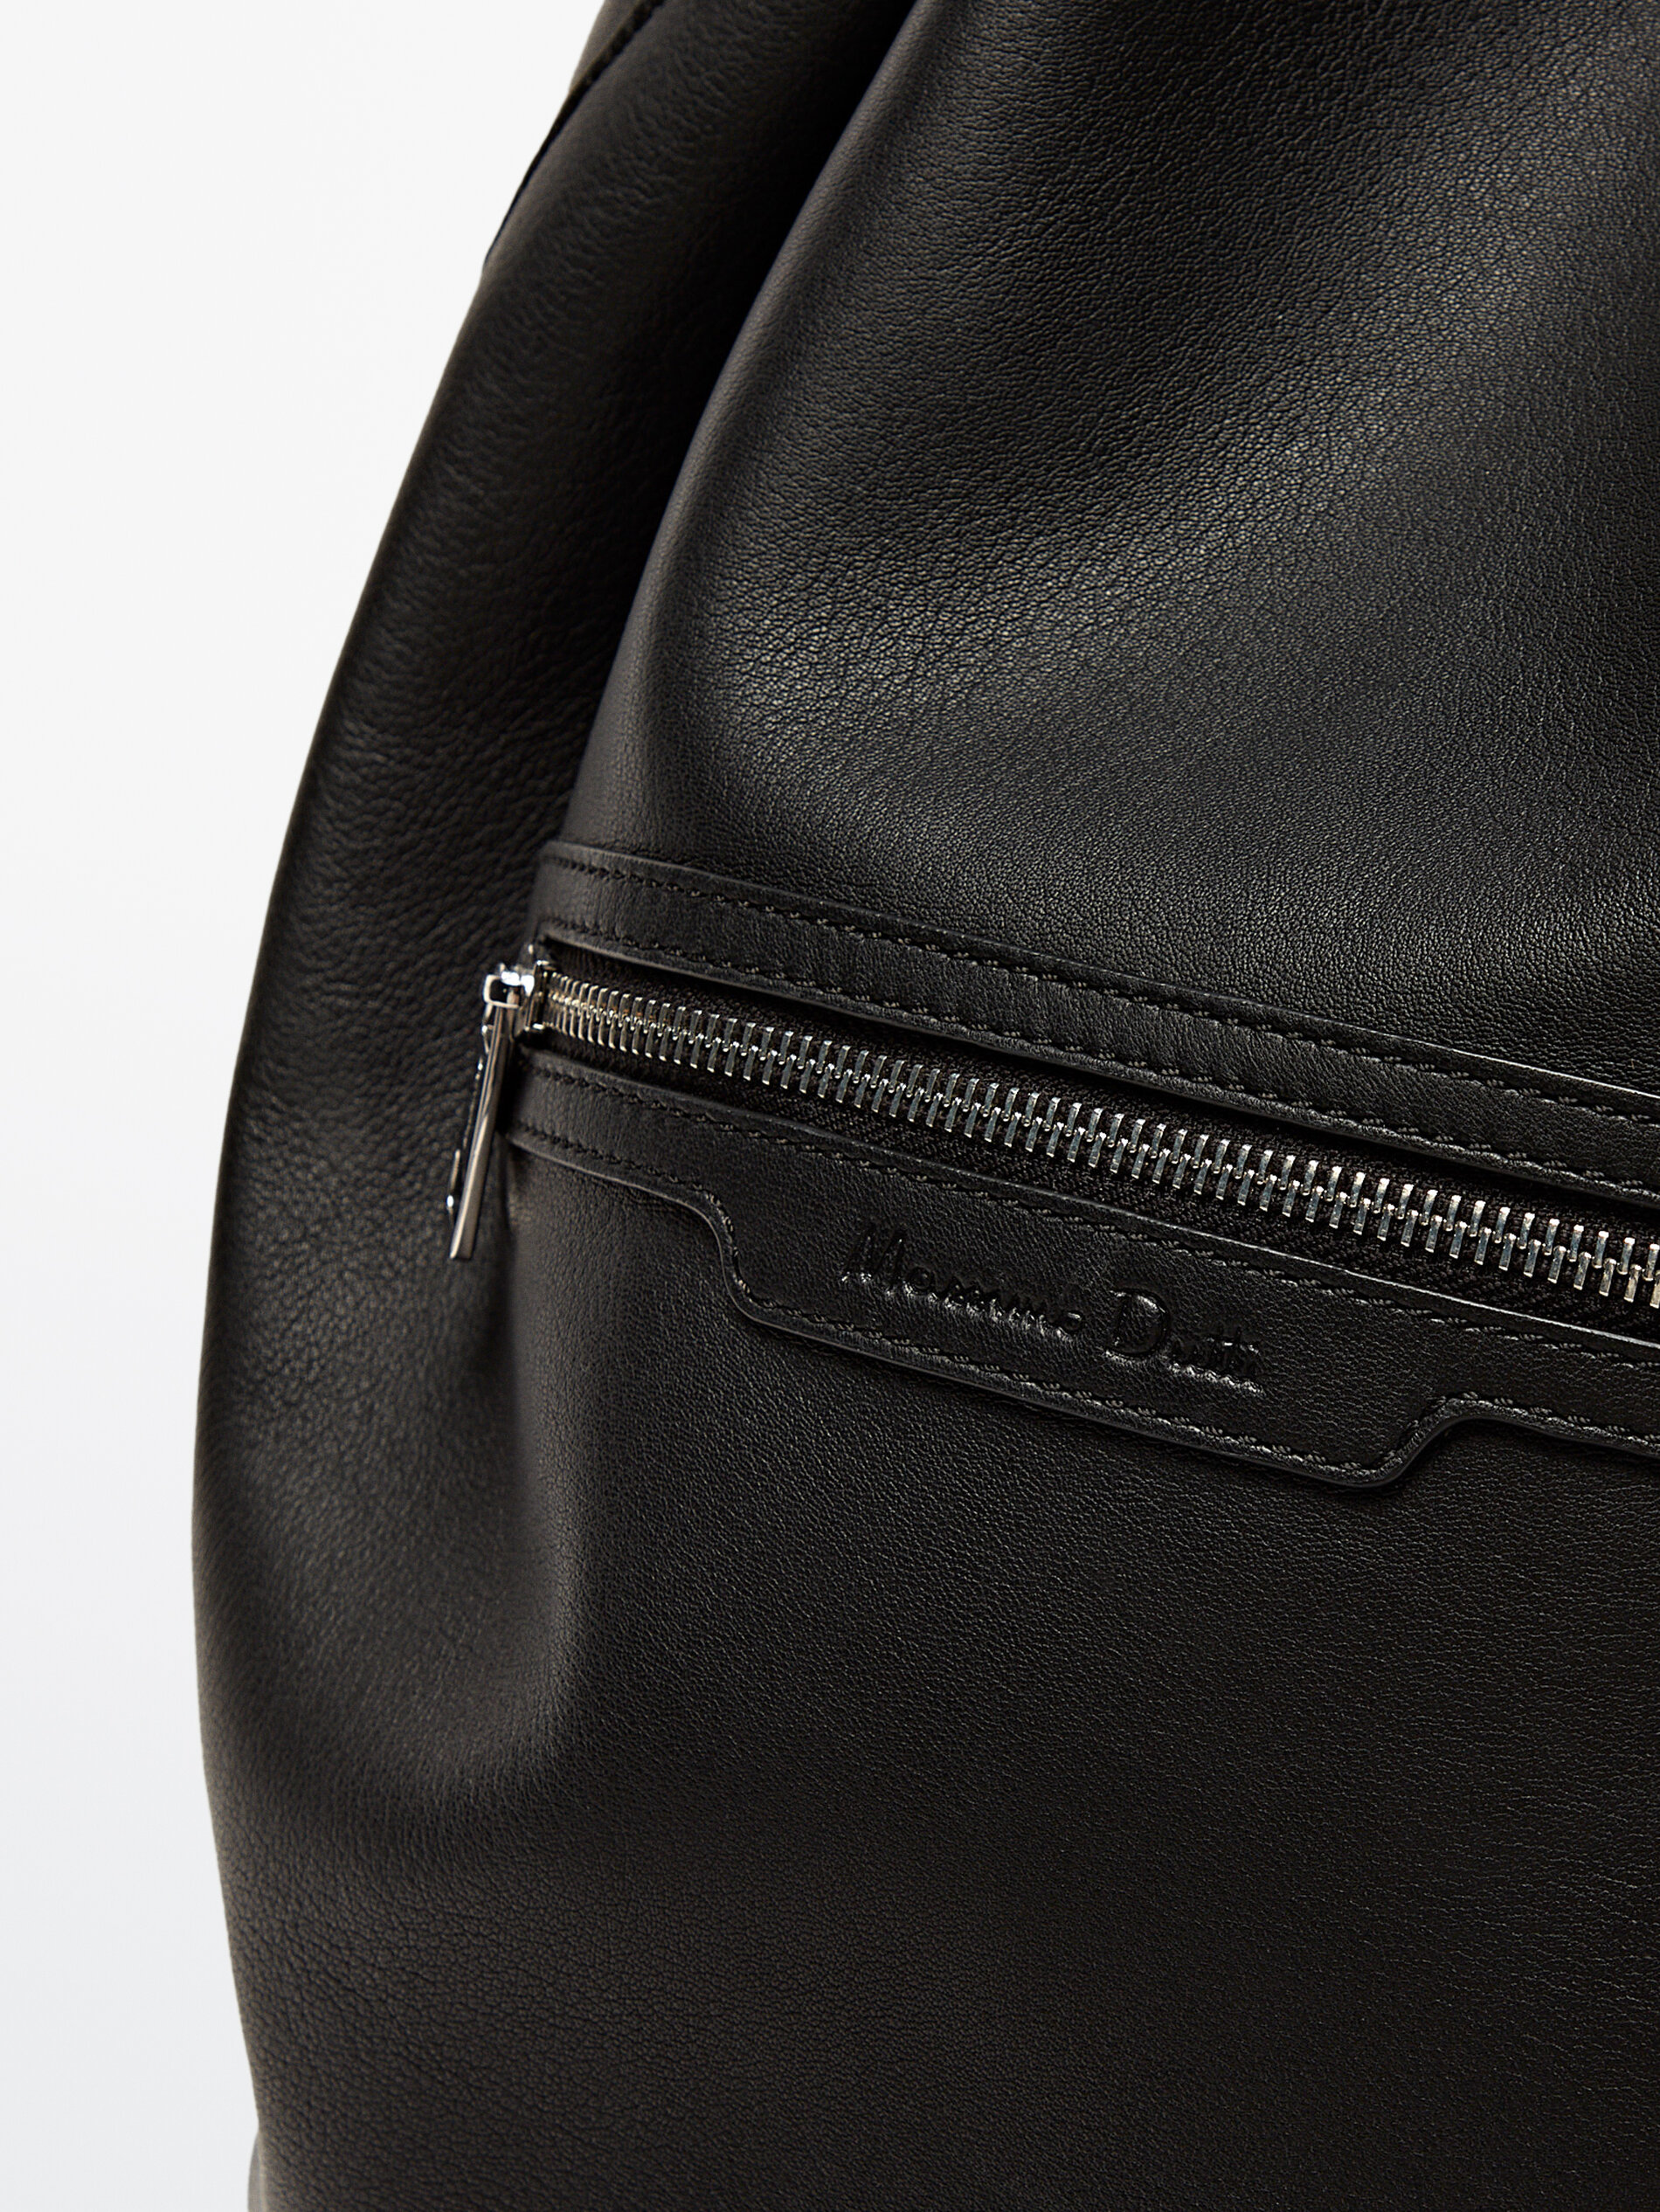 Massimo Dutti Black Leather Backpack - Big Apple Buddy